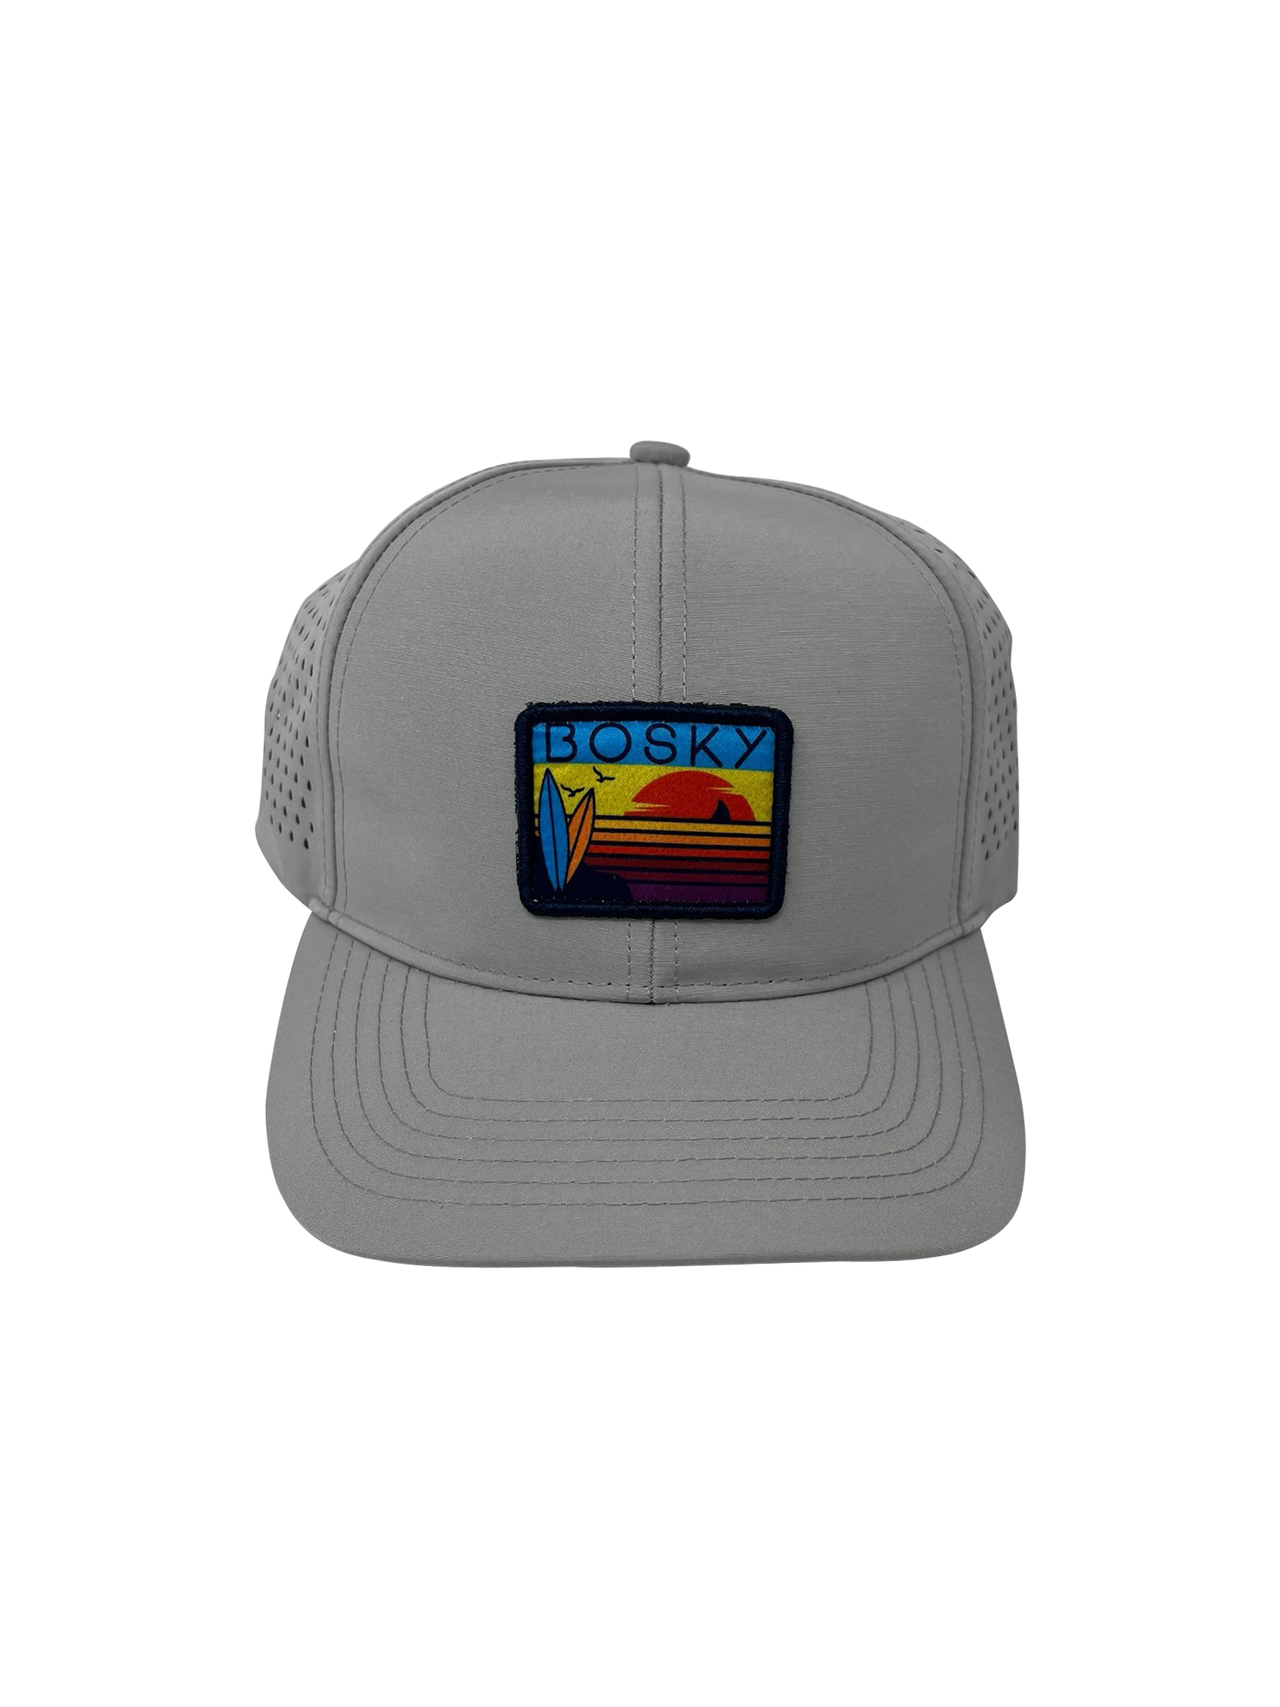 Bosky Beach Waterproof Snapback Hat